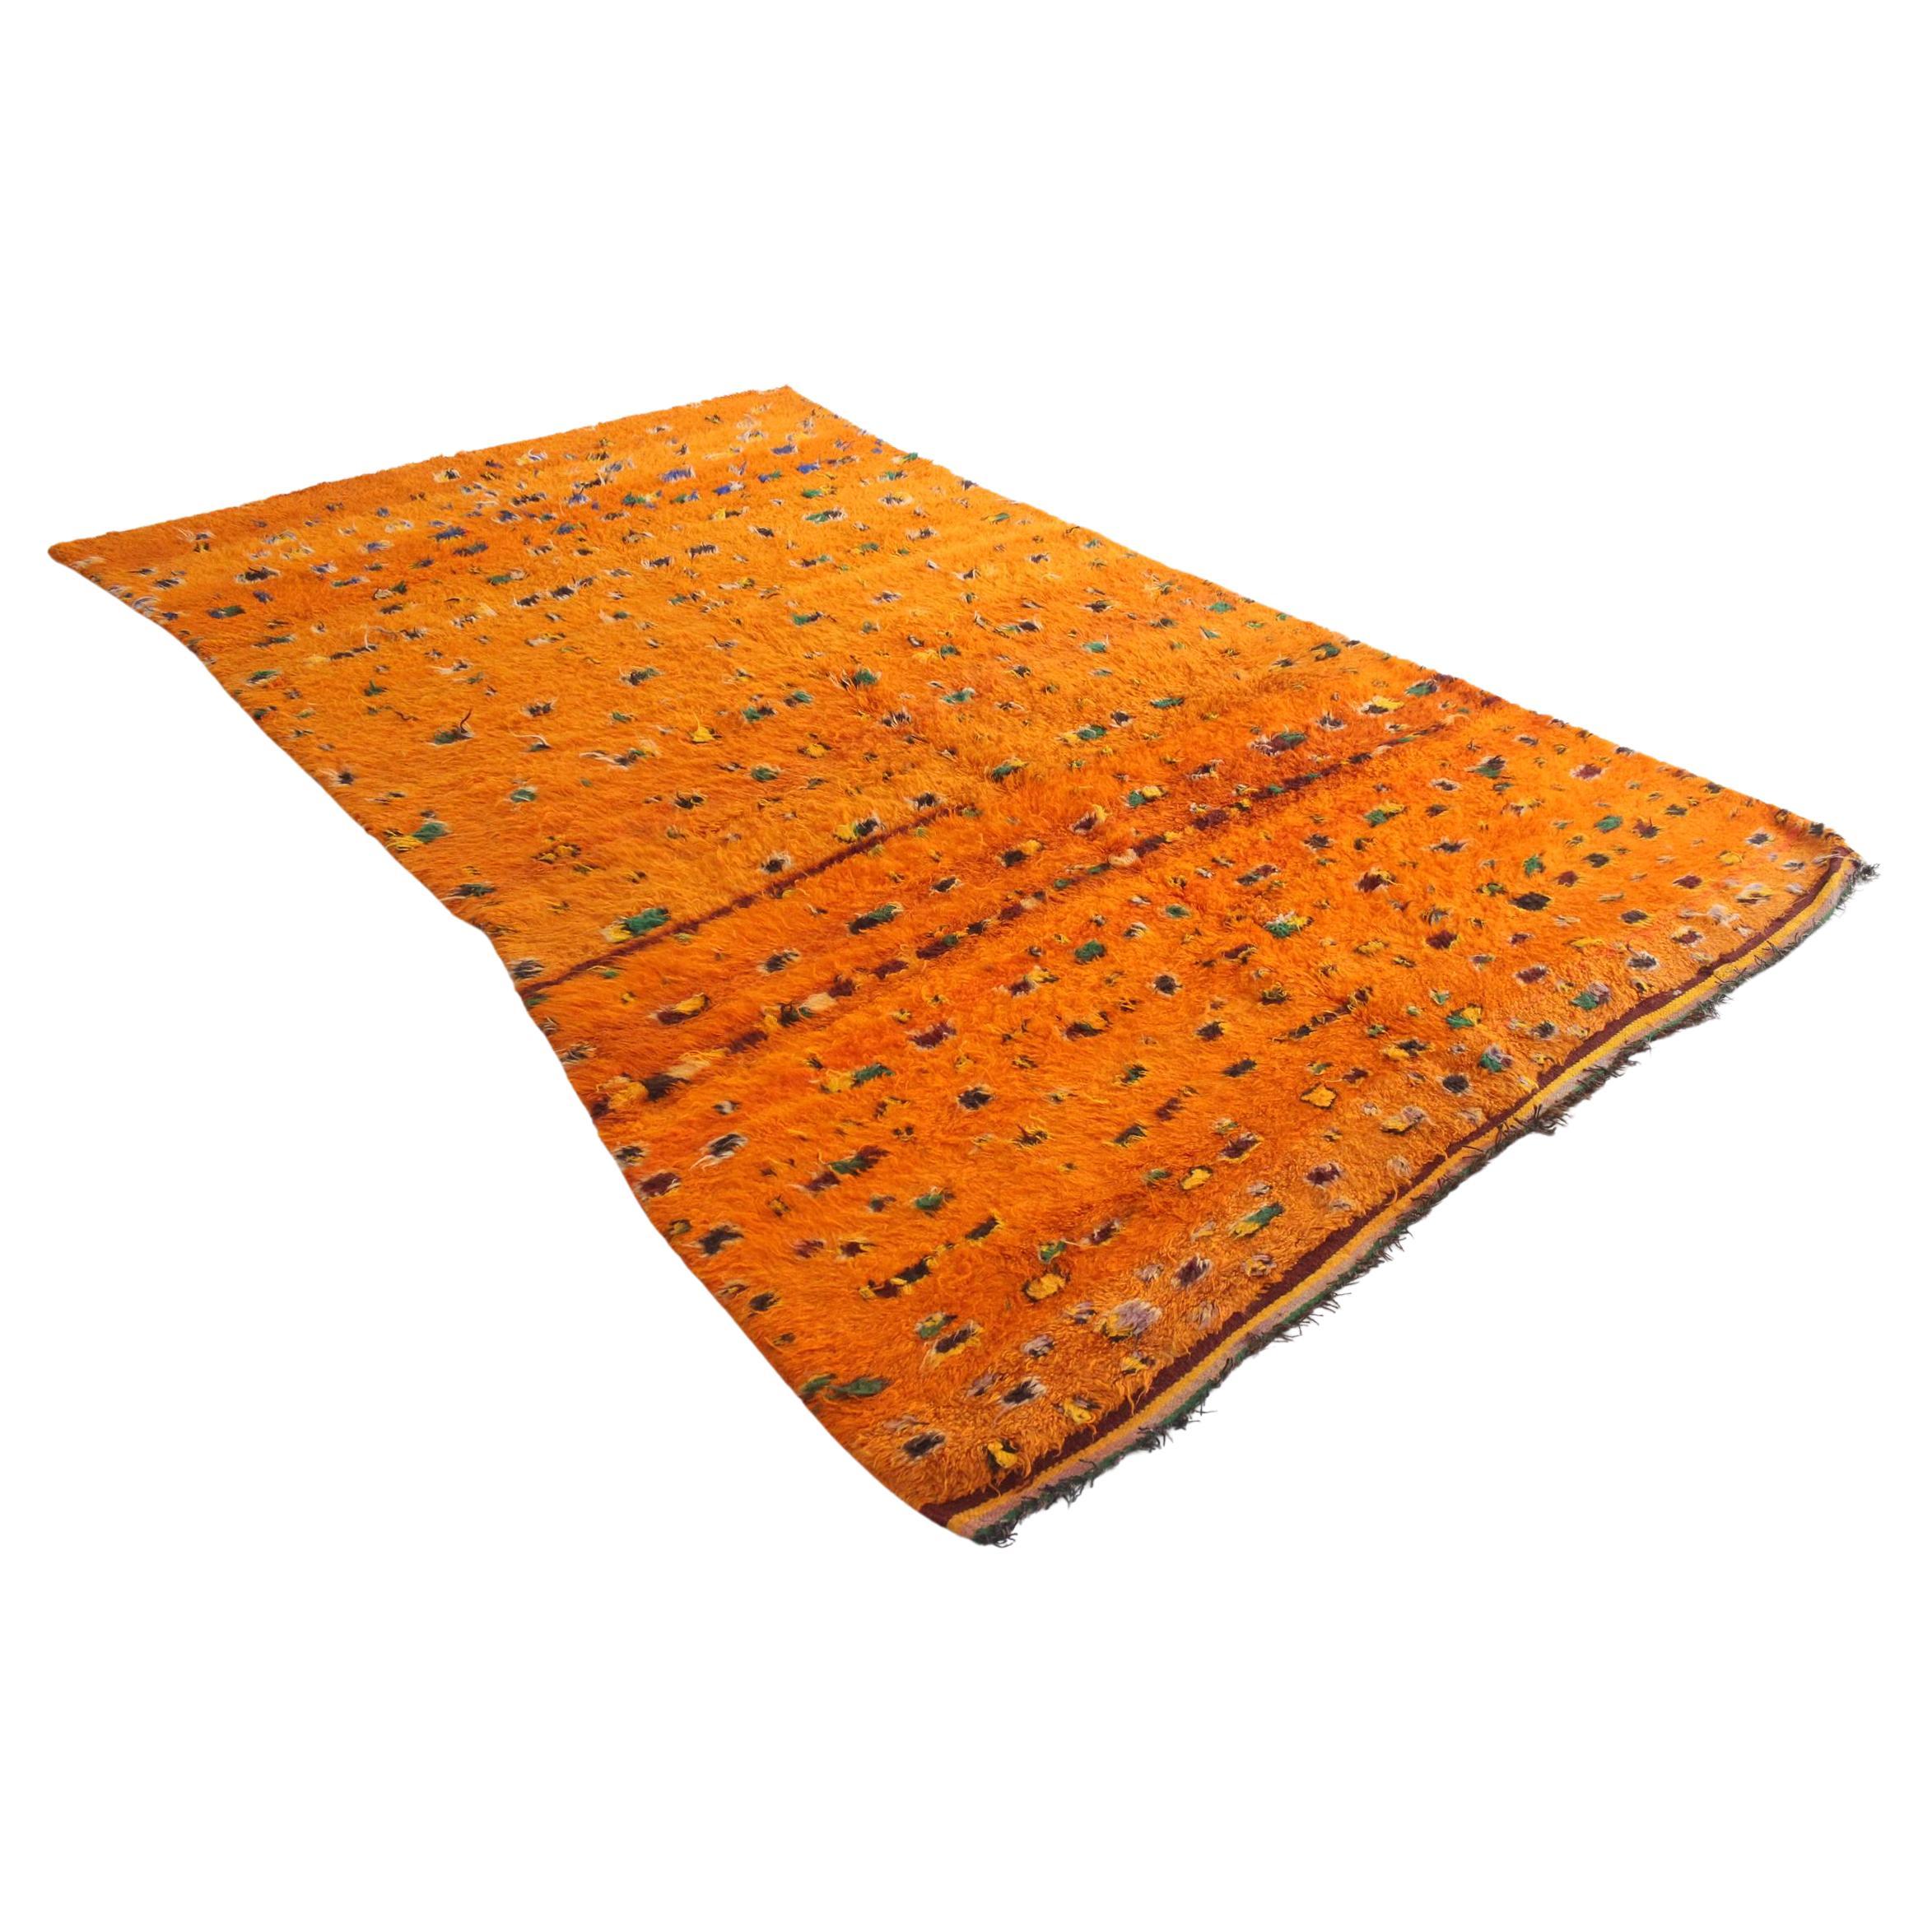 Tapis marocain vintage orange - 6,5 x 10,5 pieds / 198 x320 cm en vente